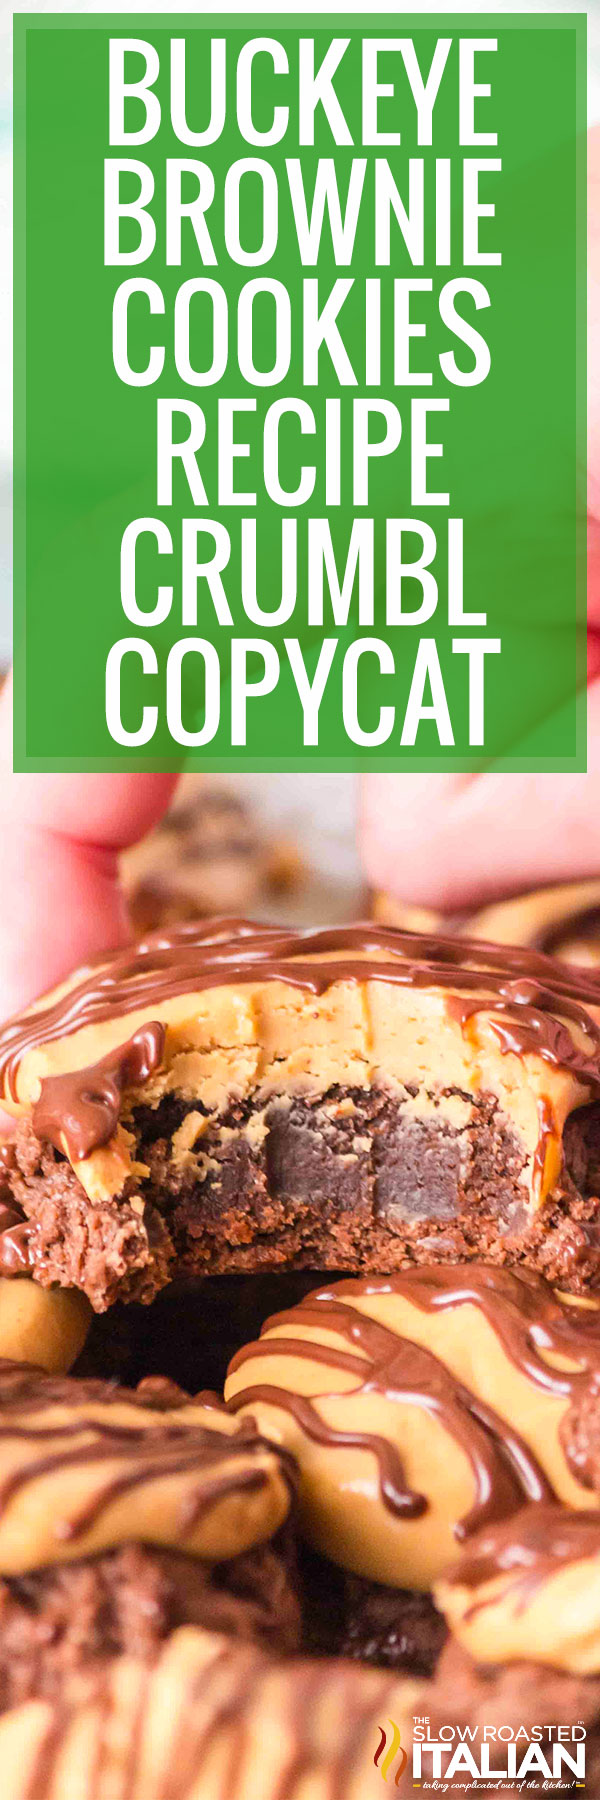 Buckeye Brownie Cookies Recipe Crumbl Copycat - PIN